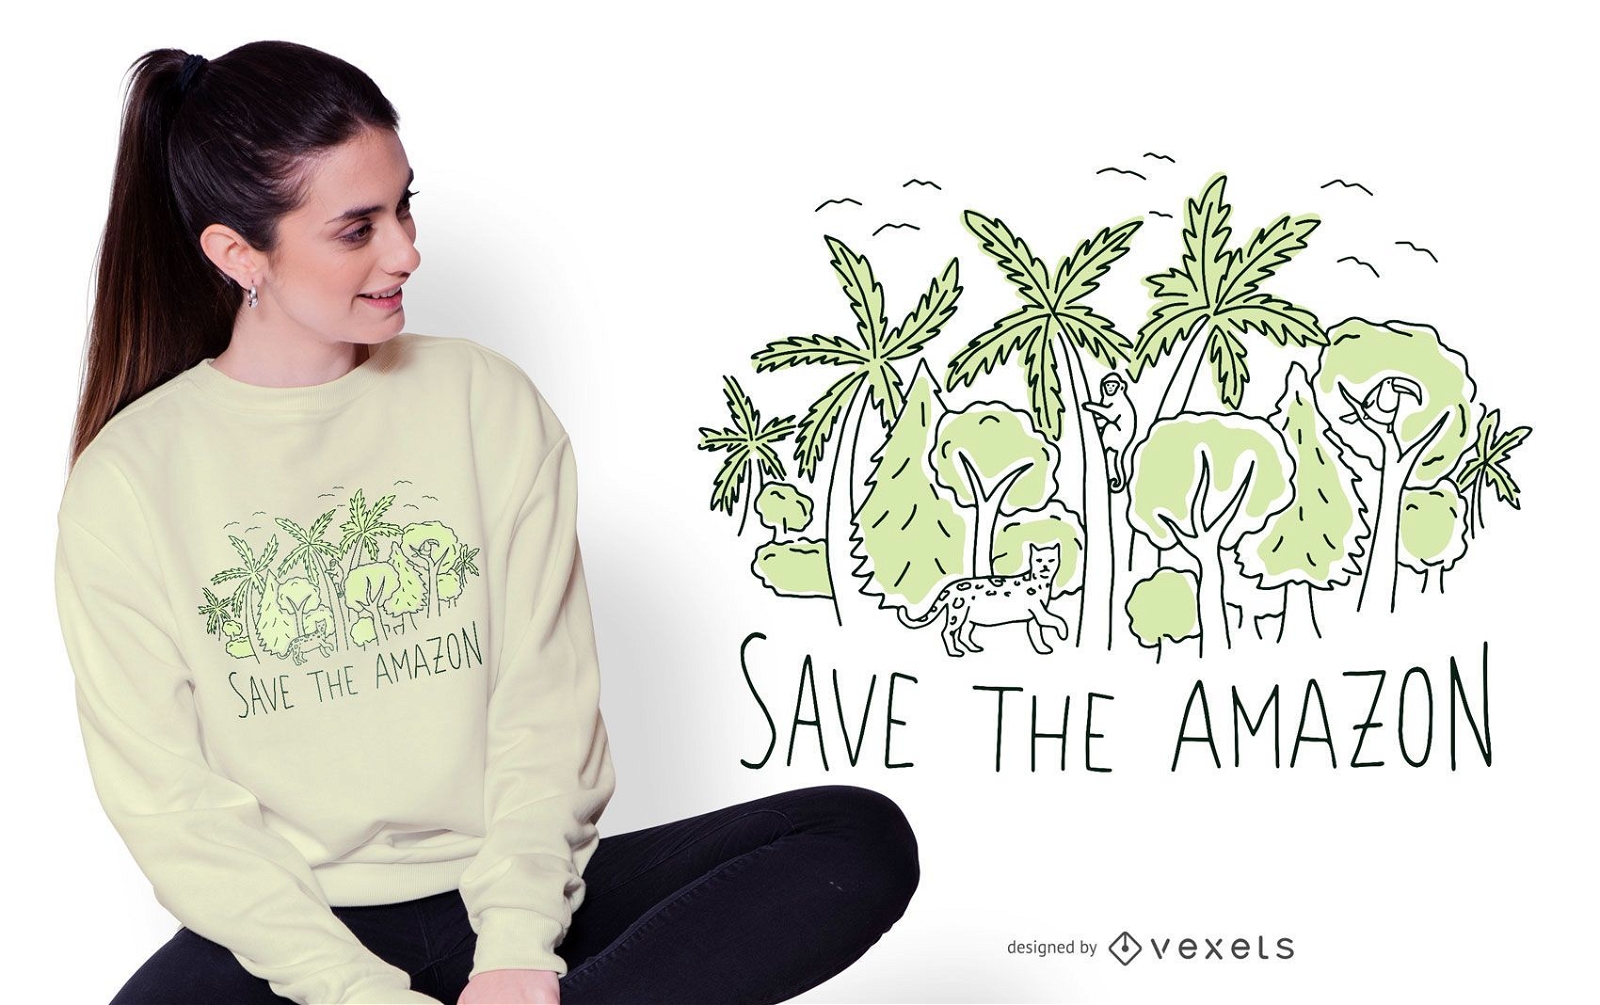 Save the amazon t-shirt design